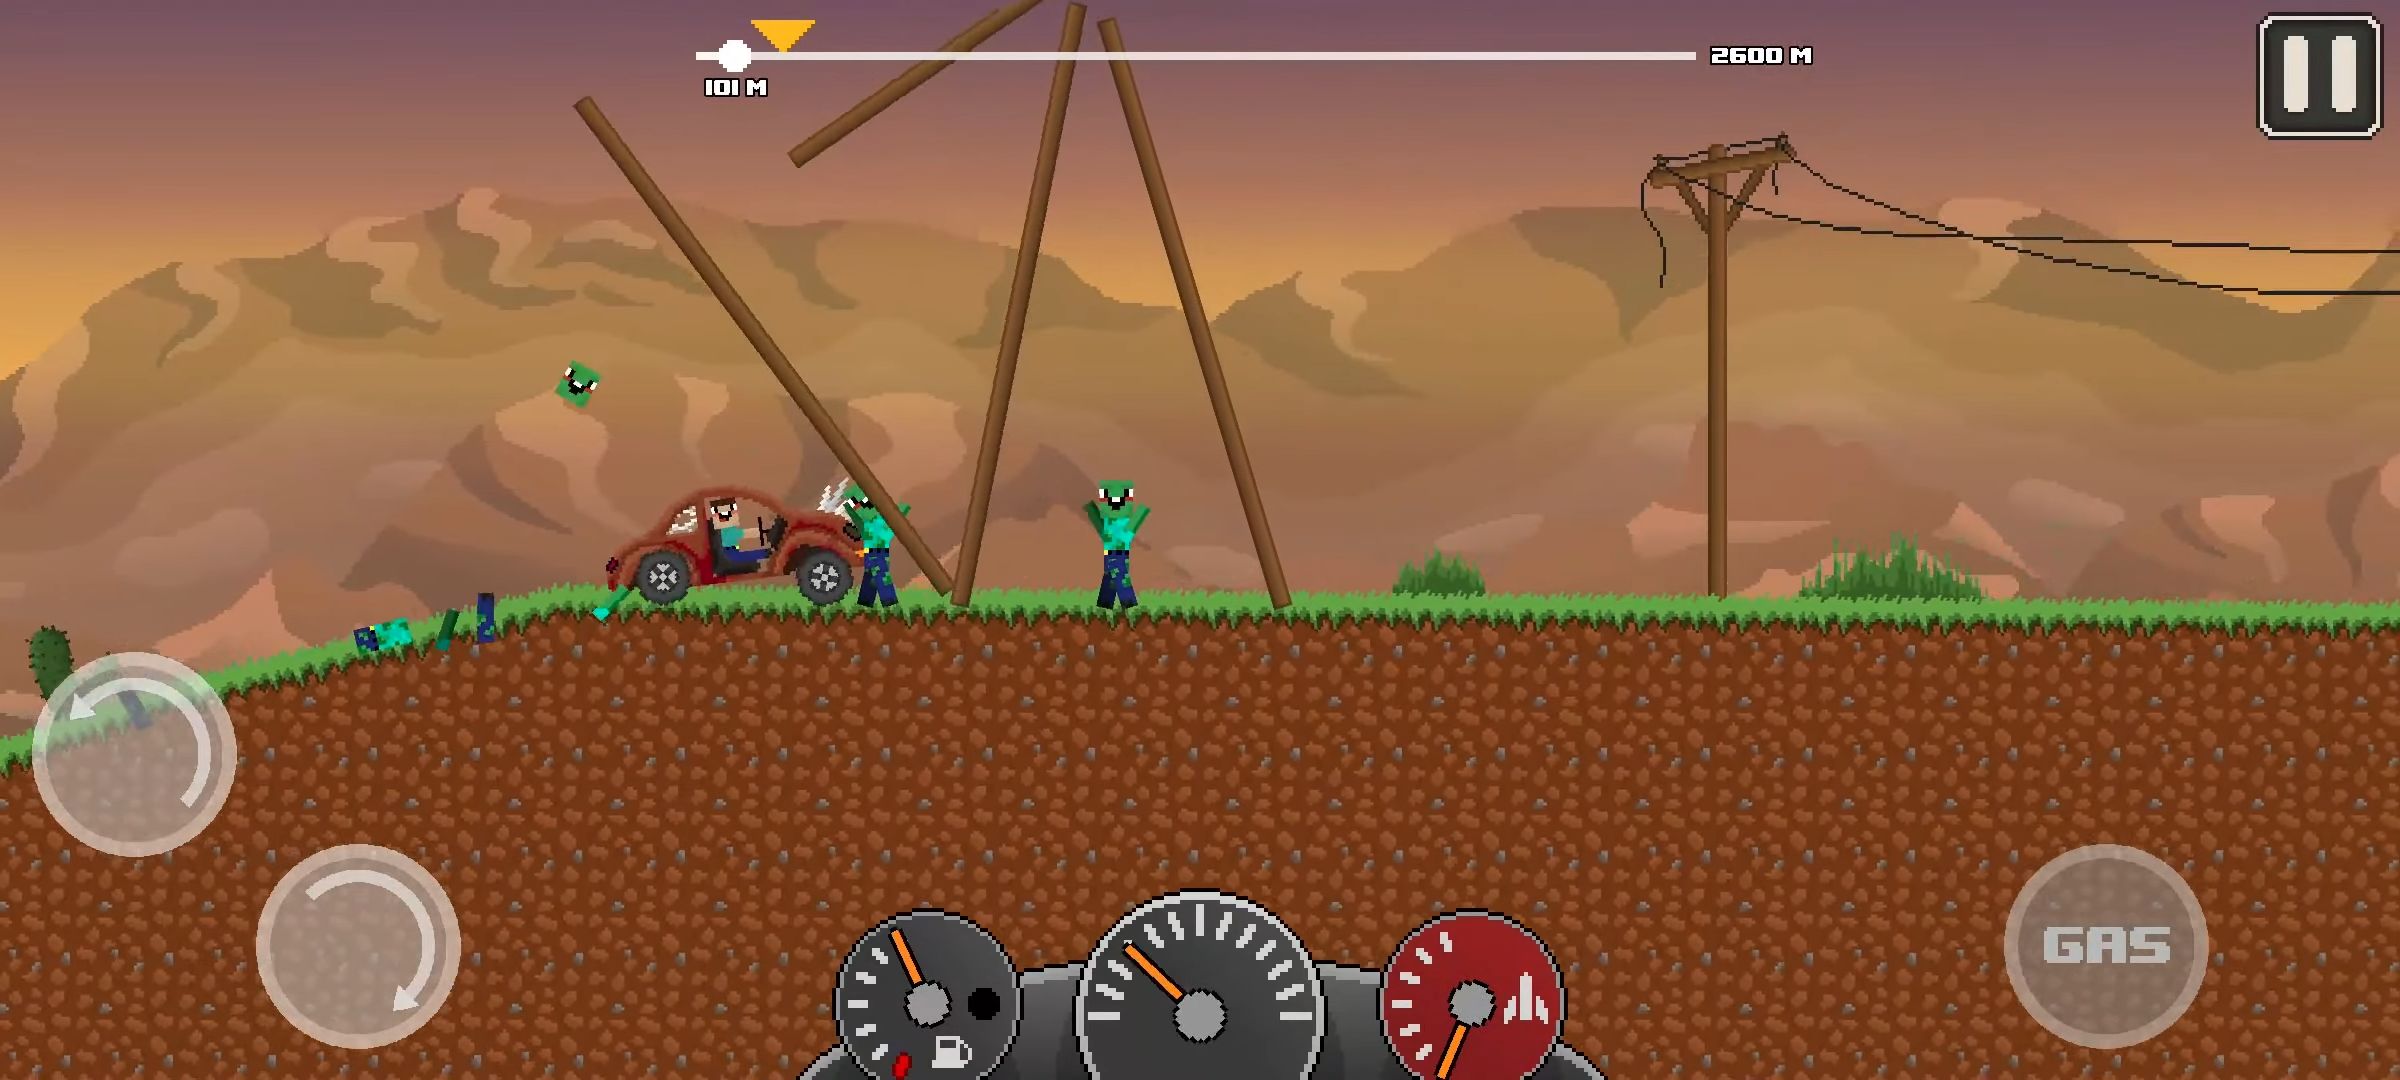 Noob: Up Hill Racing Car Climb - Android game screenshots.